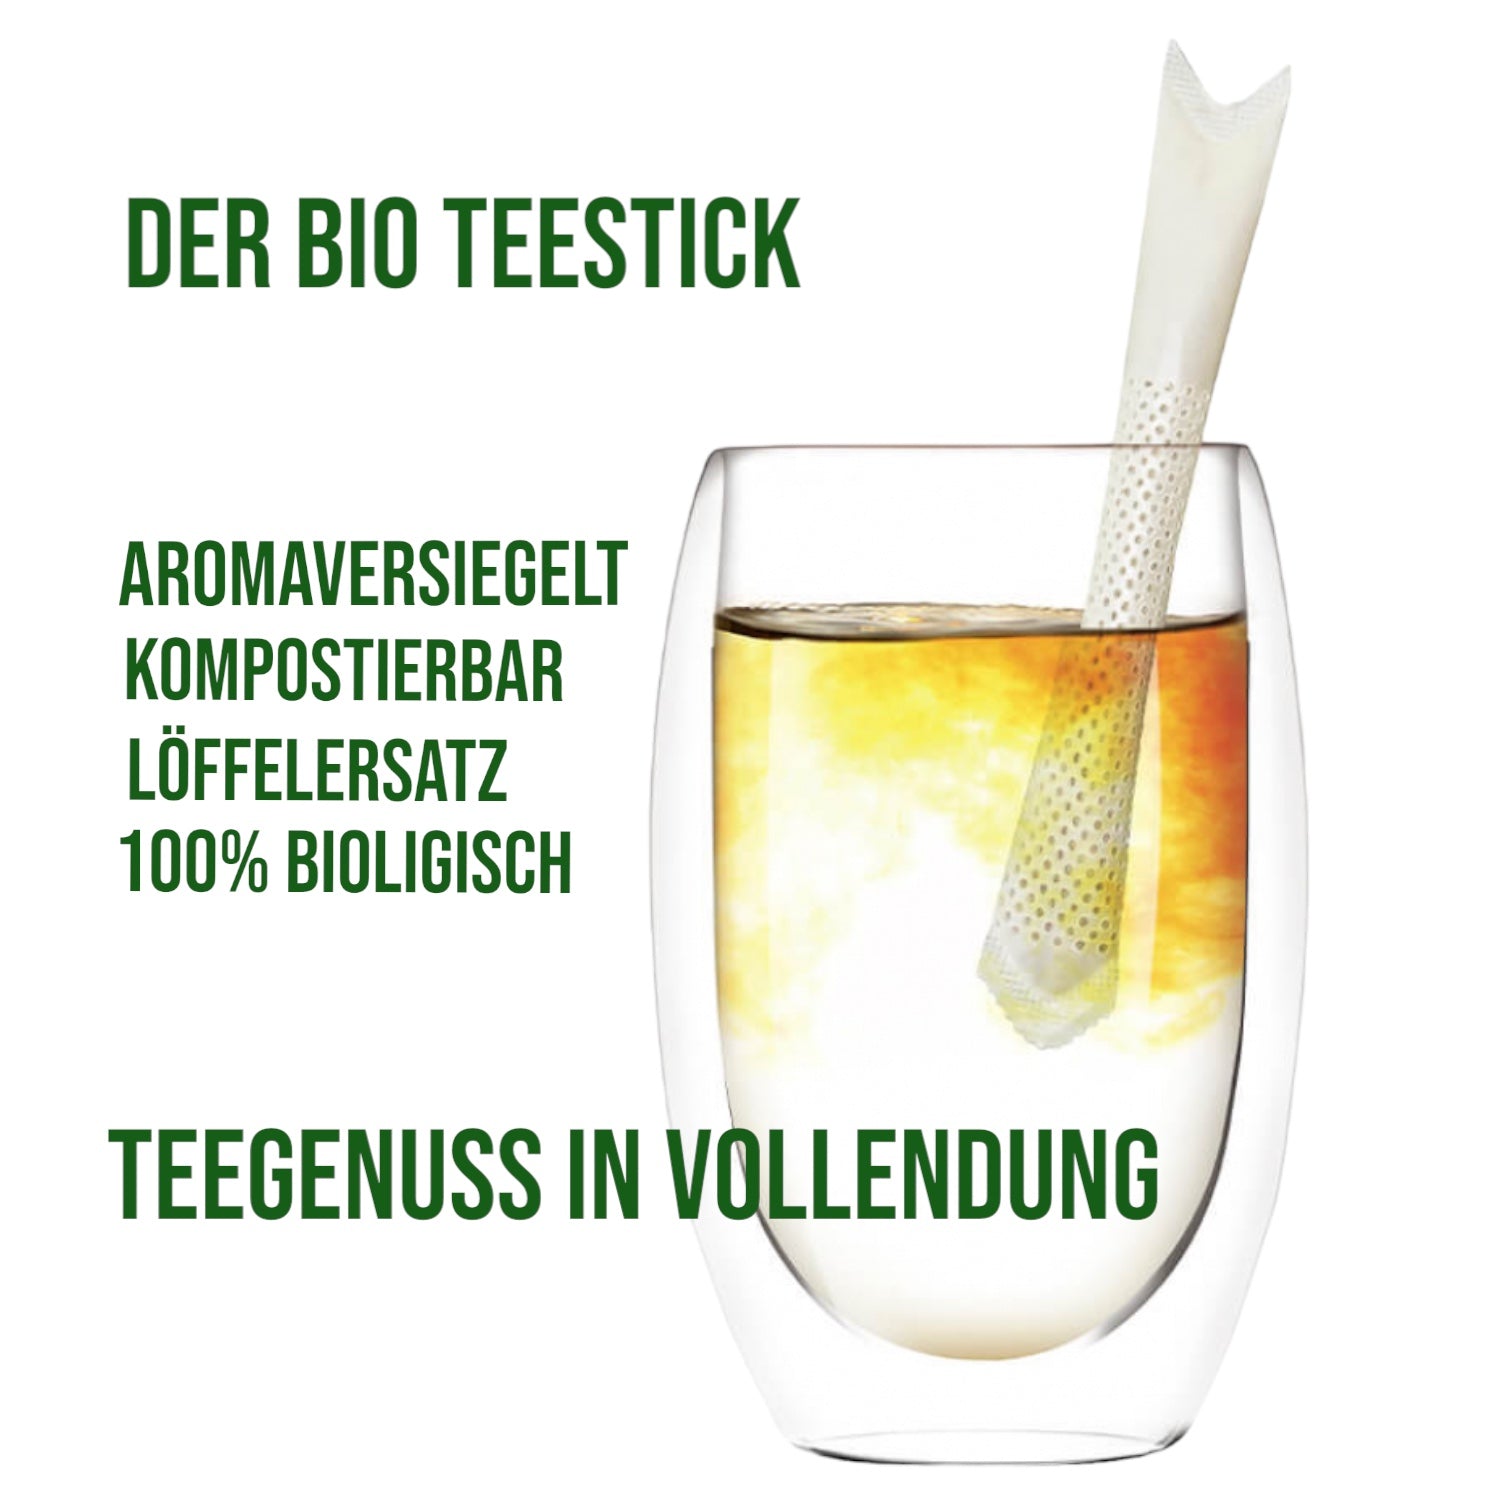 Bio TeeStick teanovation | by Naturify.ch